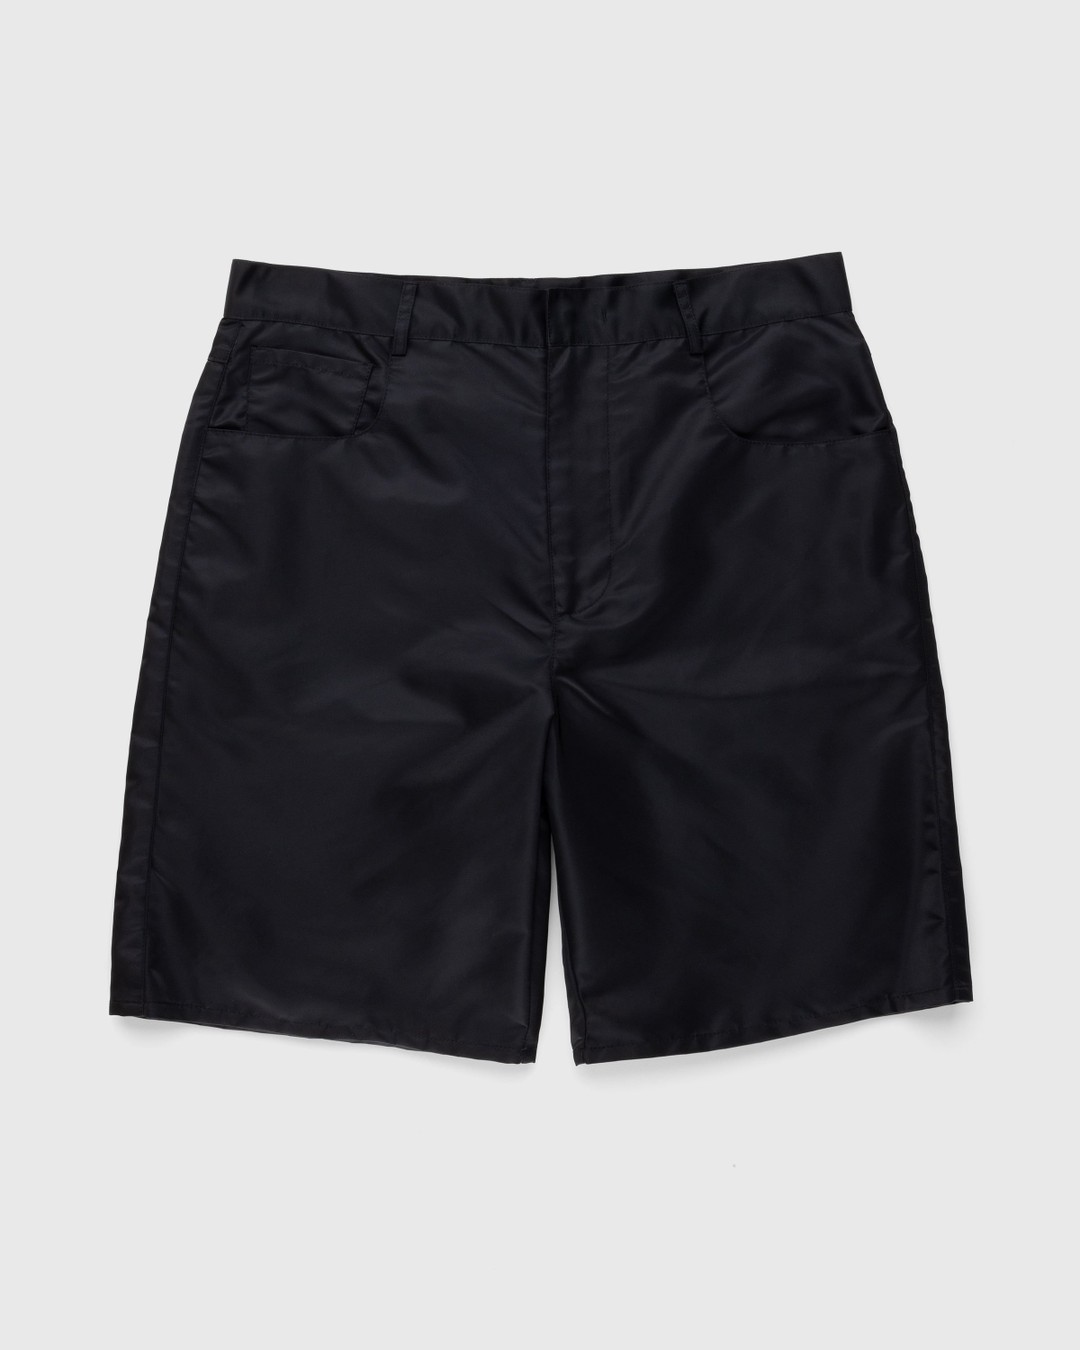 Trussardi – Nylon Shorts Black - Shorts - Black - Image 1